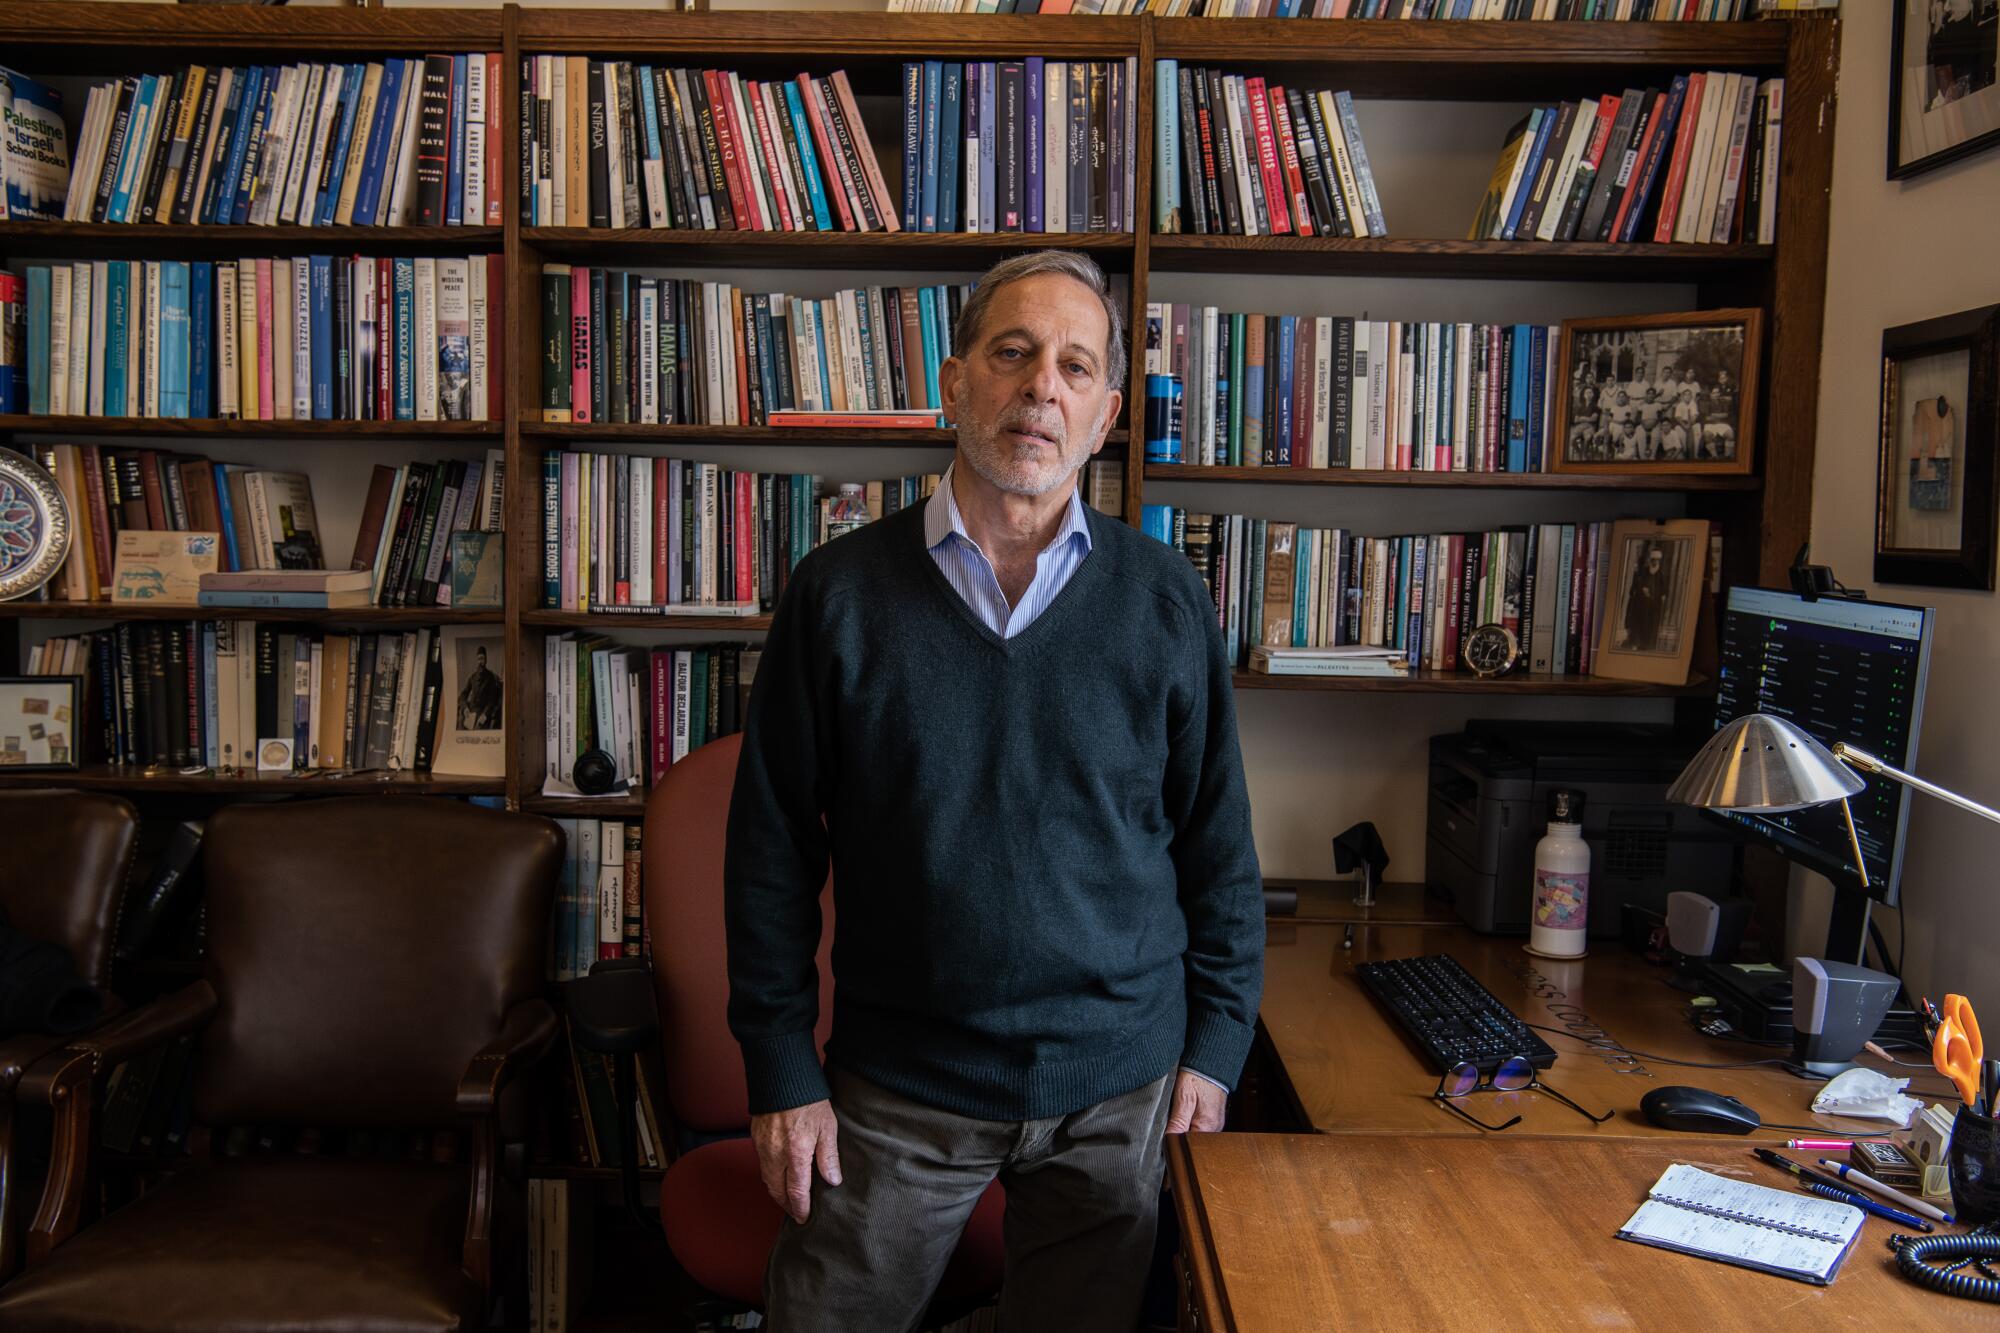 Professor Rashid Khalidi poses for a portrait in his office at Columbia University.